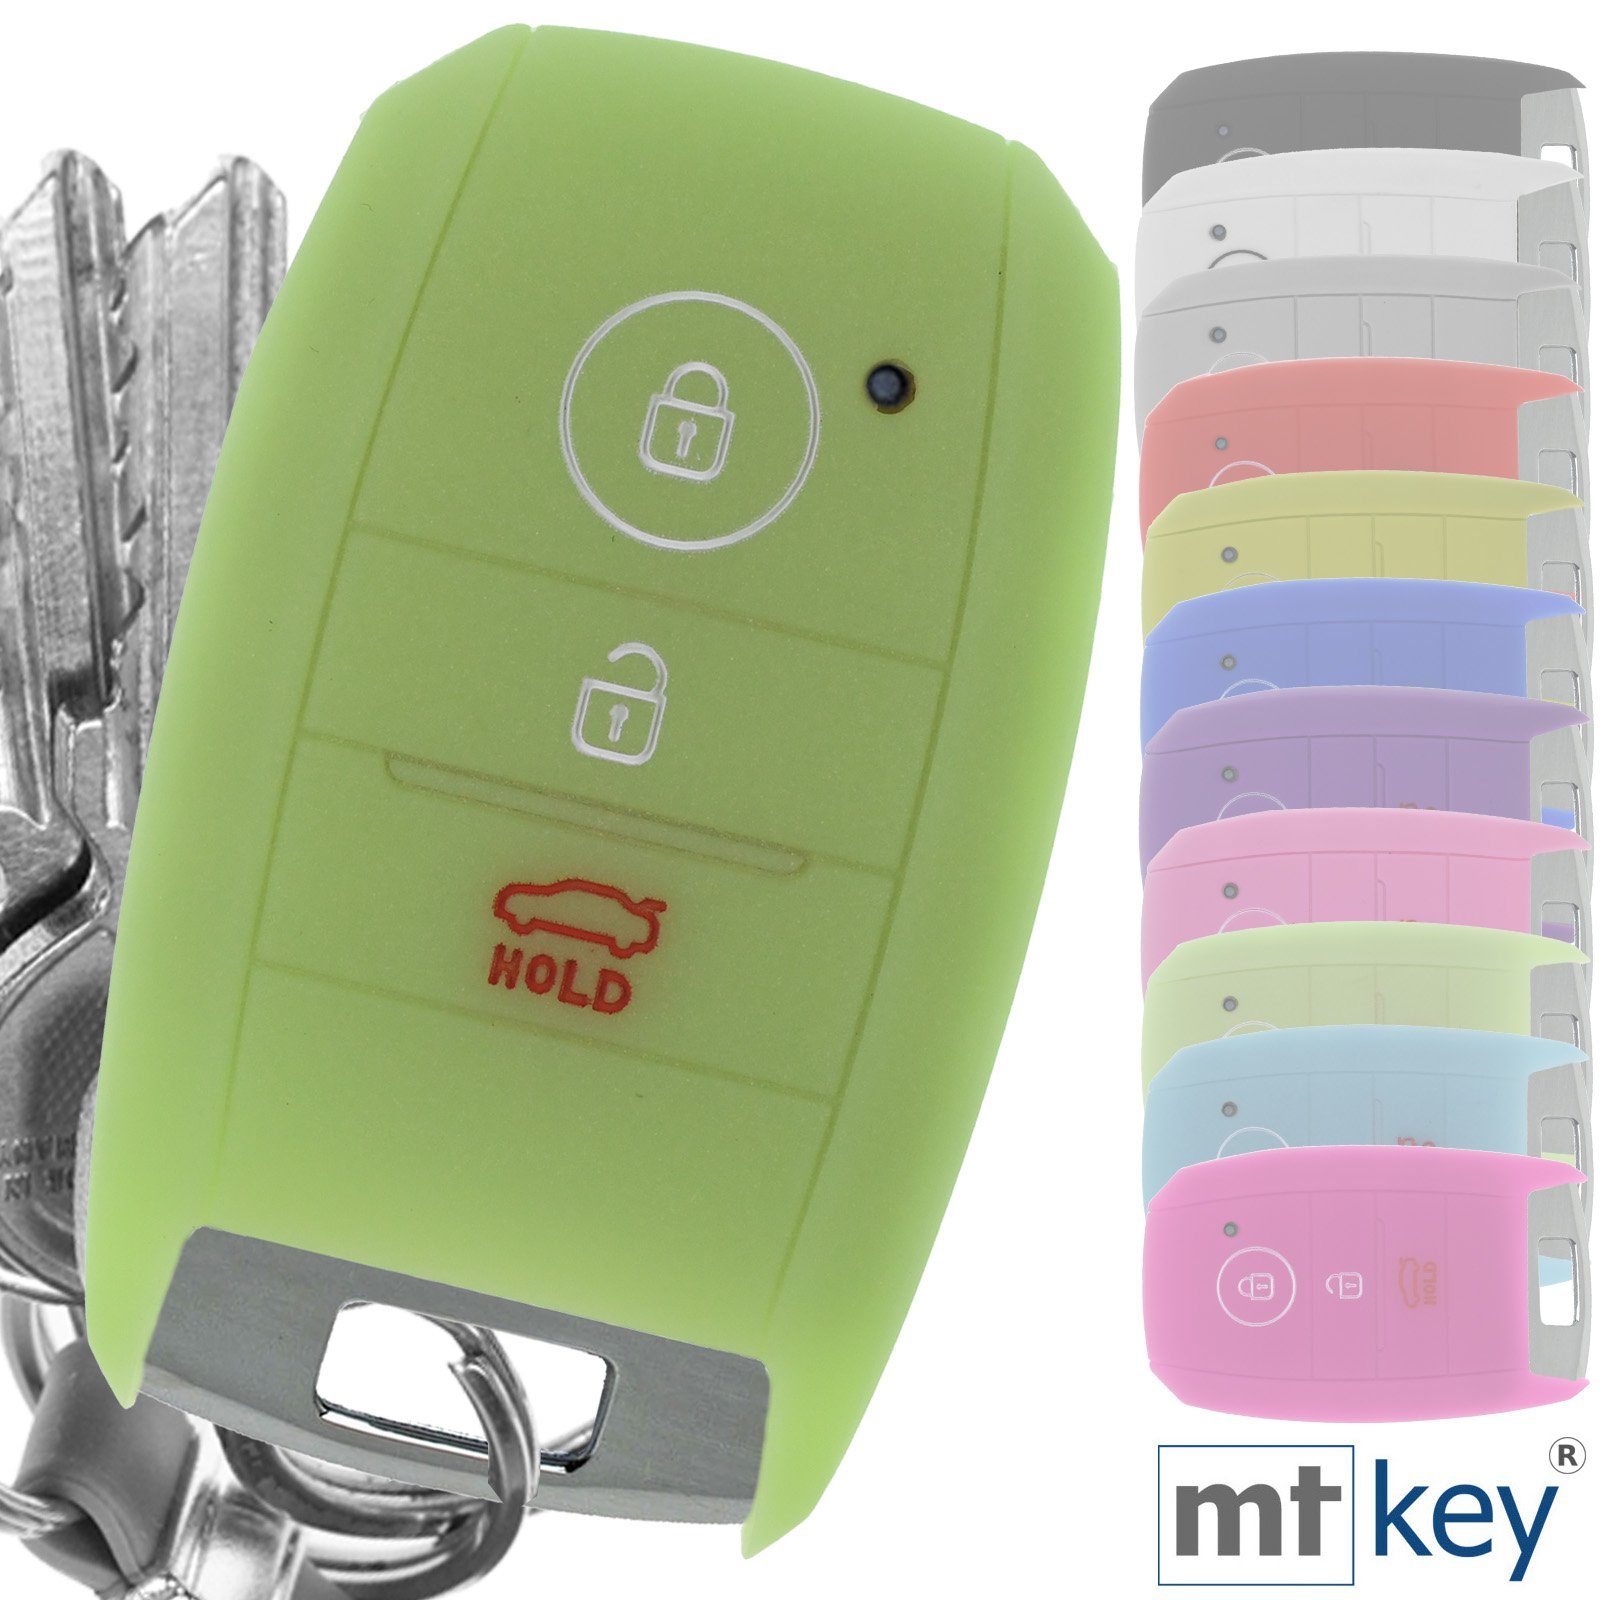 Picantio Stonic mt-key Schutzhülle Autoschlüssel Schlüsseltasche Ceed KIA KEYLESS Tasten Soul 3 Softcase Rio Sportage Grün, fluoreszierend Silikon für